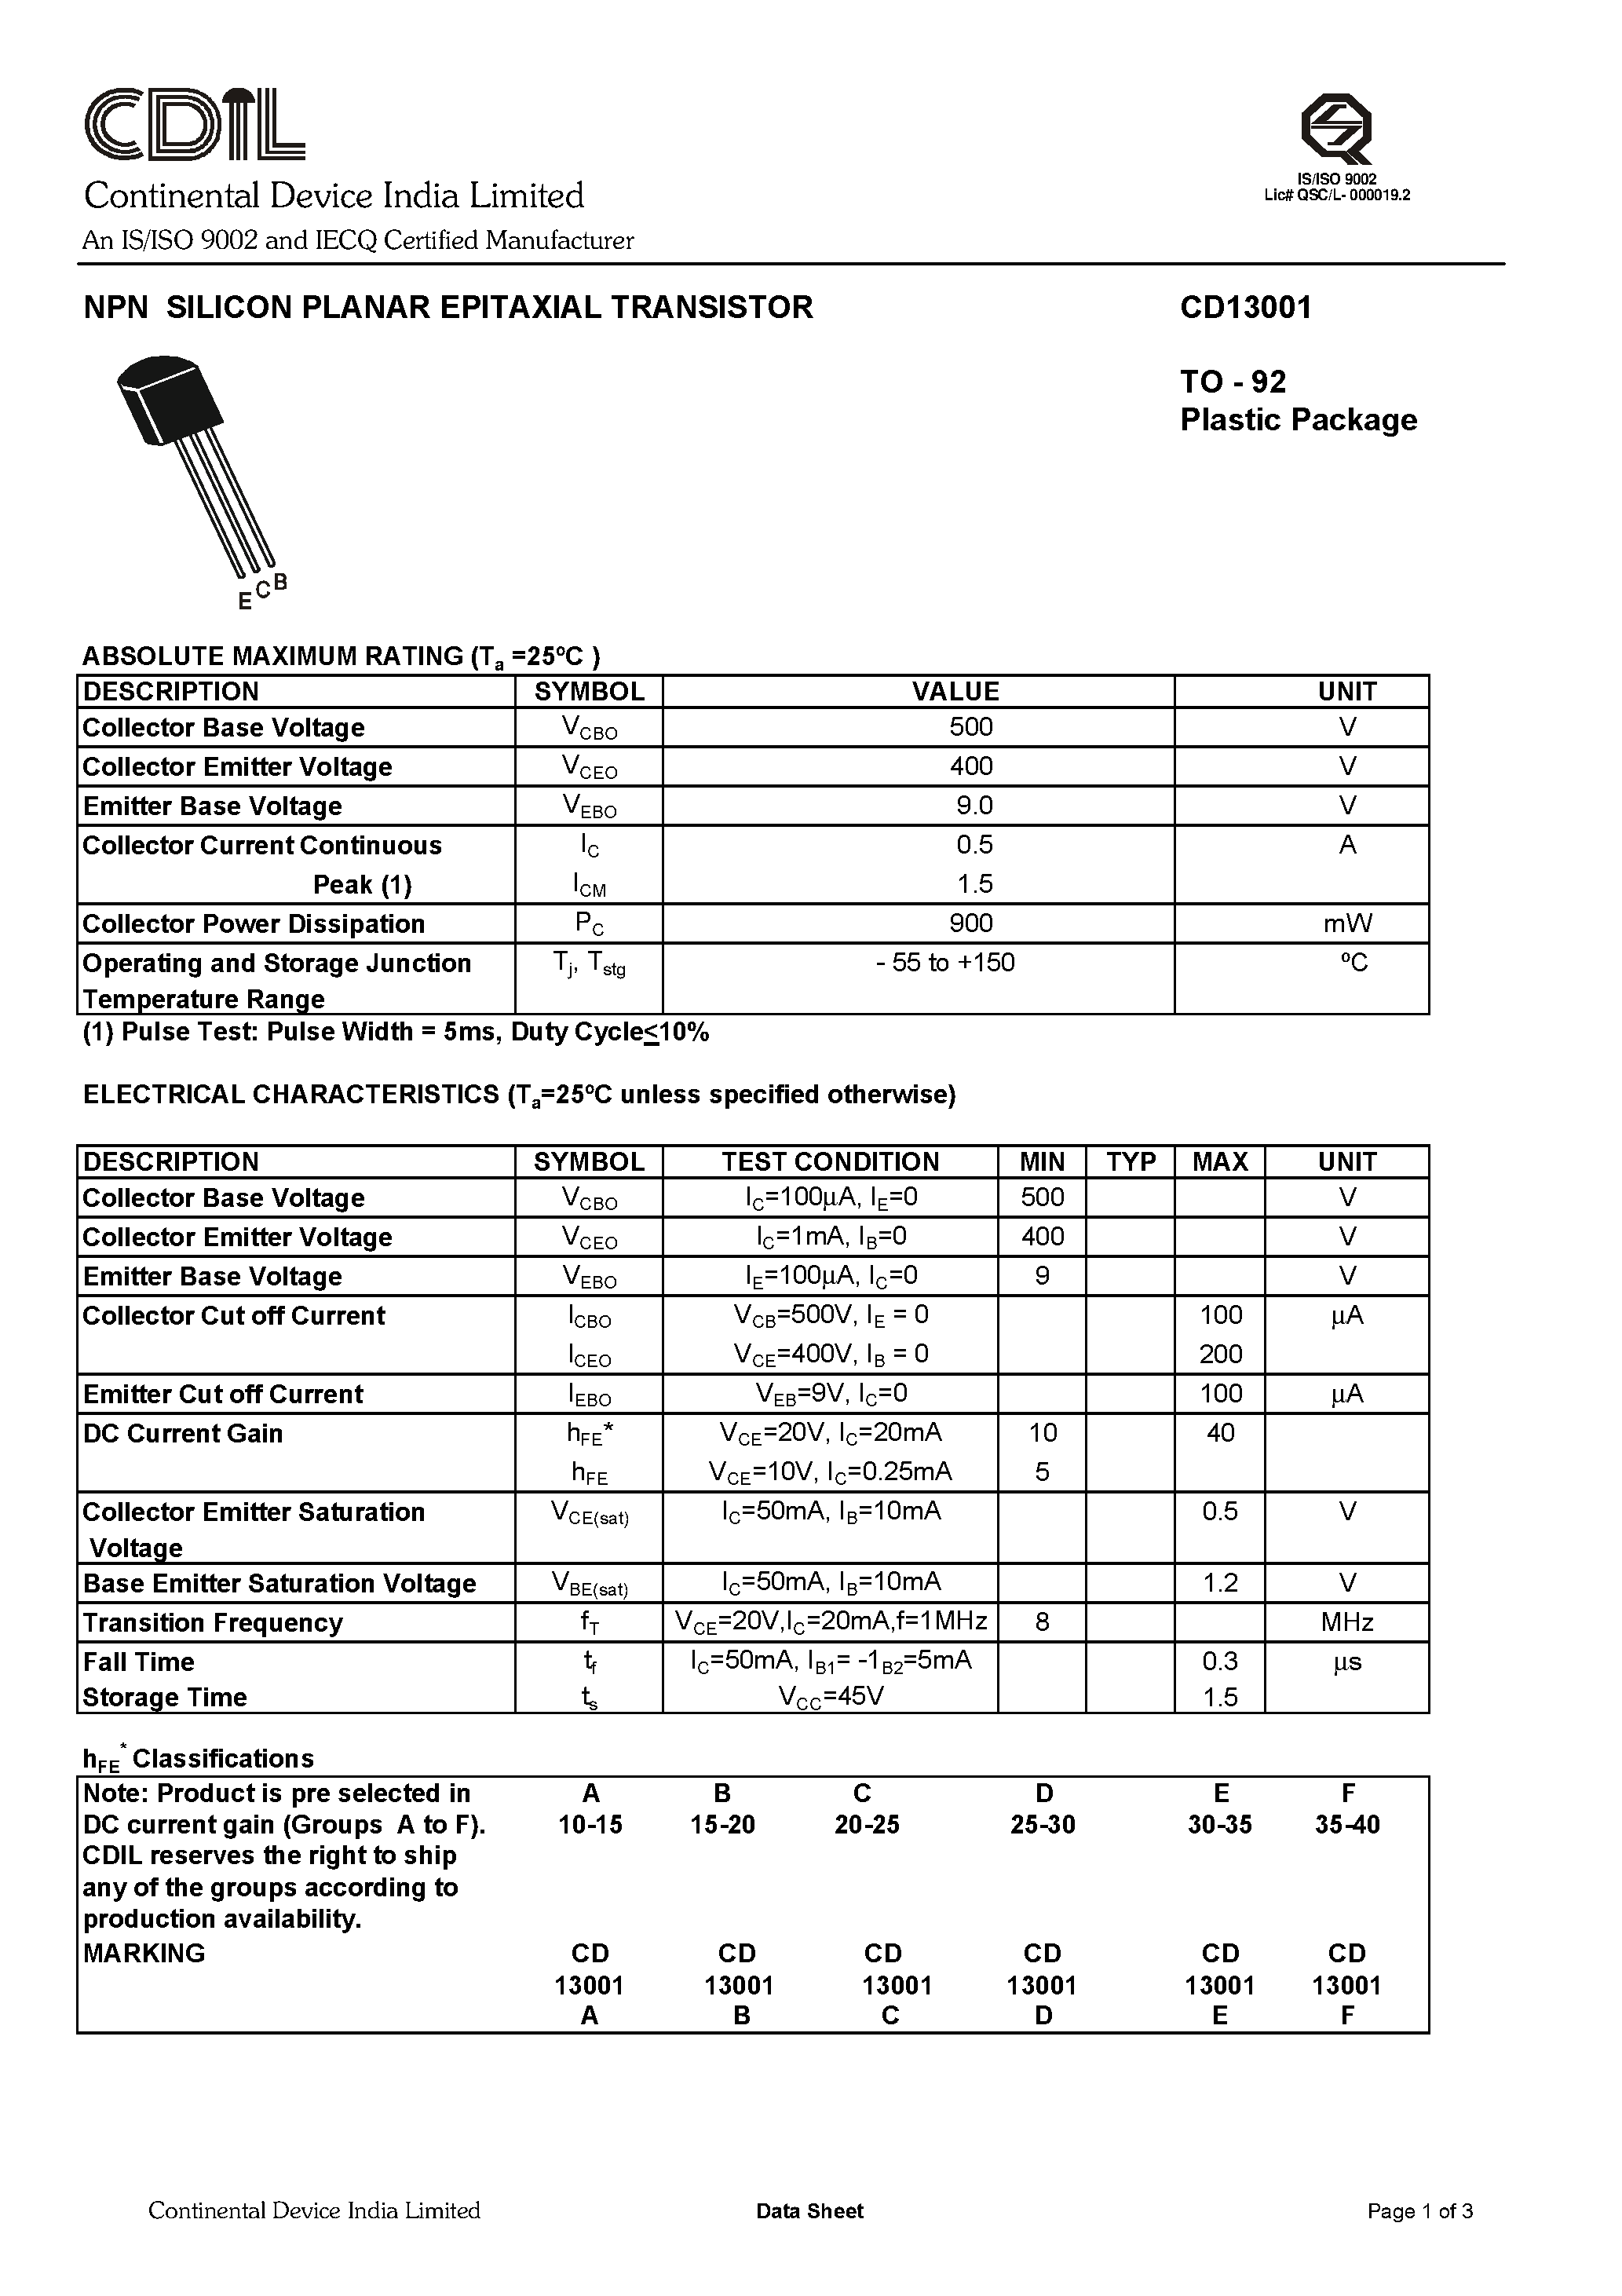 Datasheet CD3001 - NPN Silicon Planar Epitaxial Transistor page 1